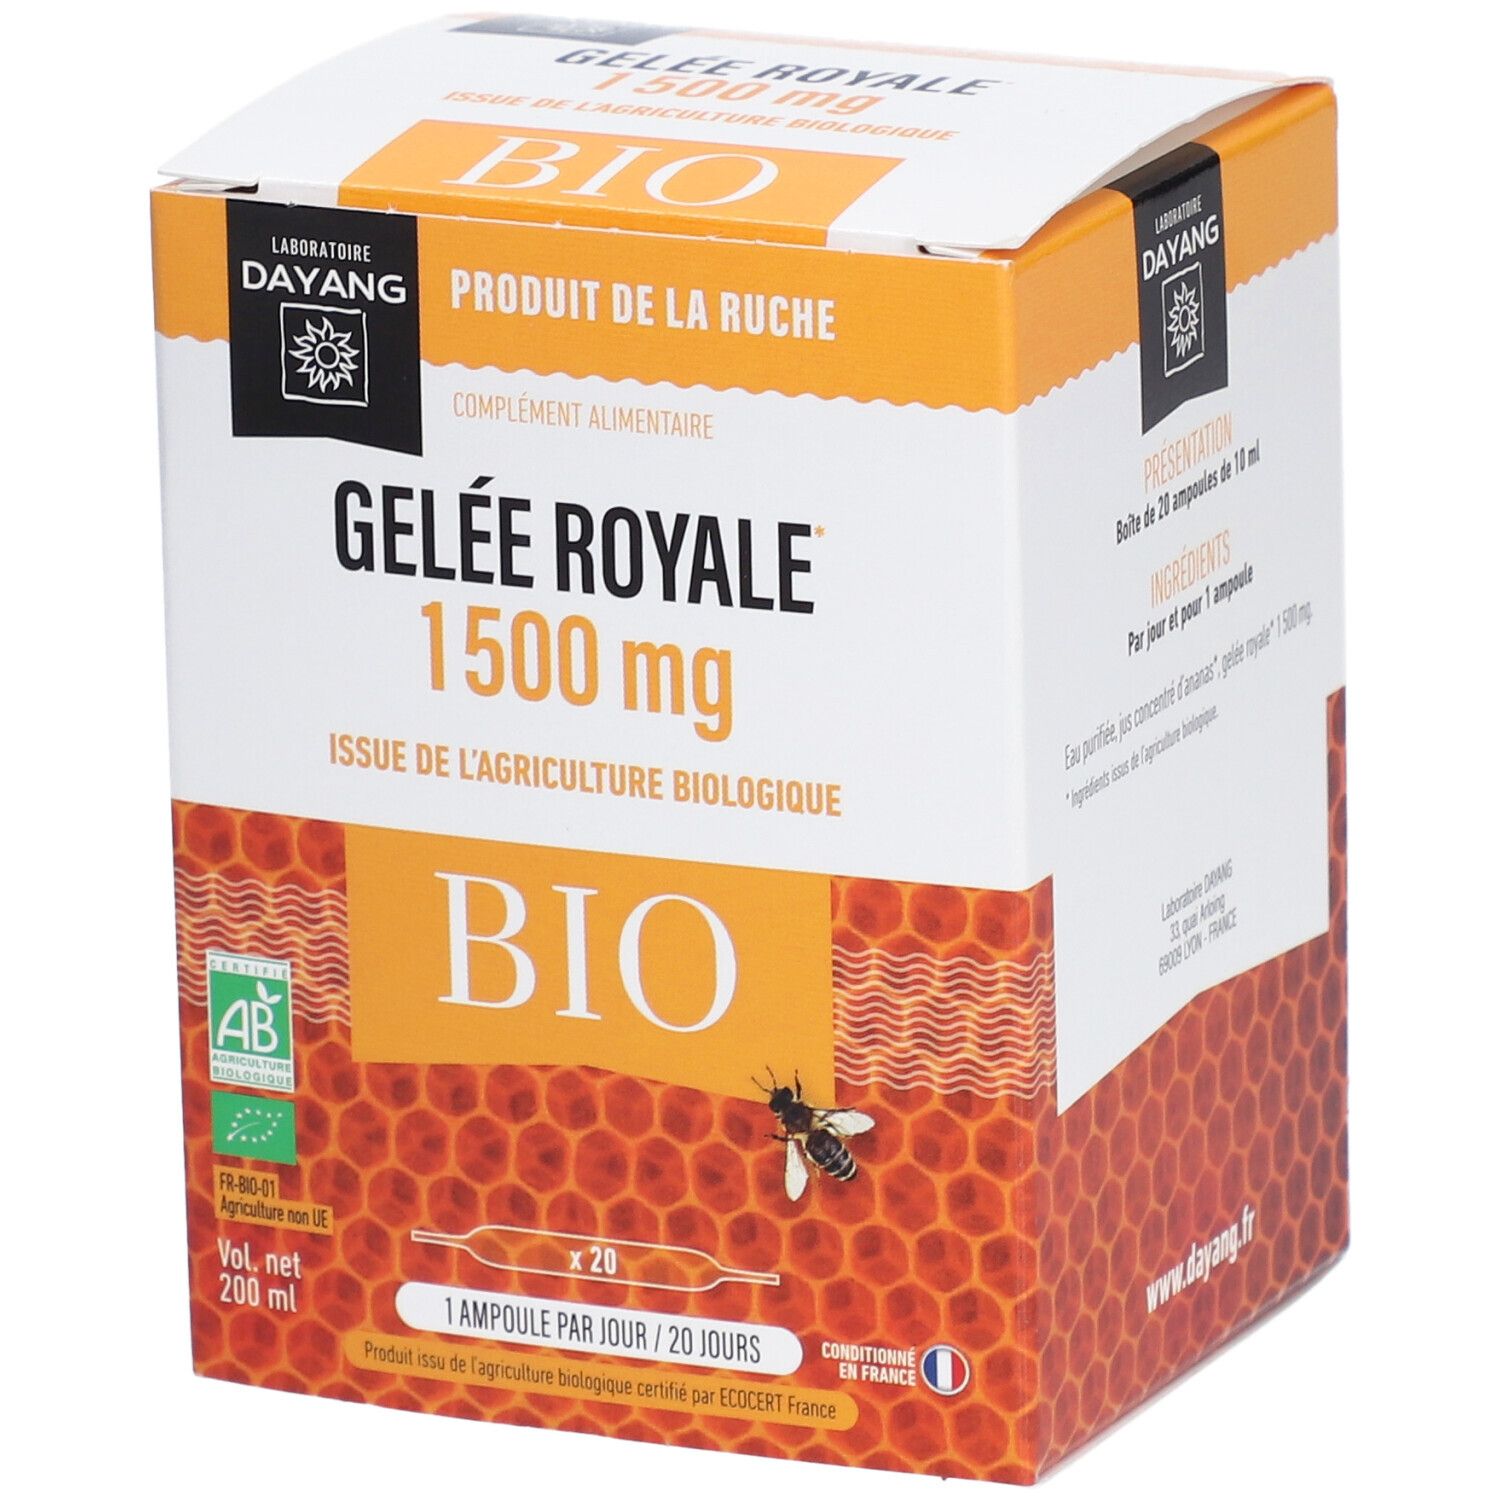 Dayang Gelée royale 1500 mg BIO